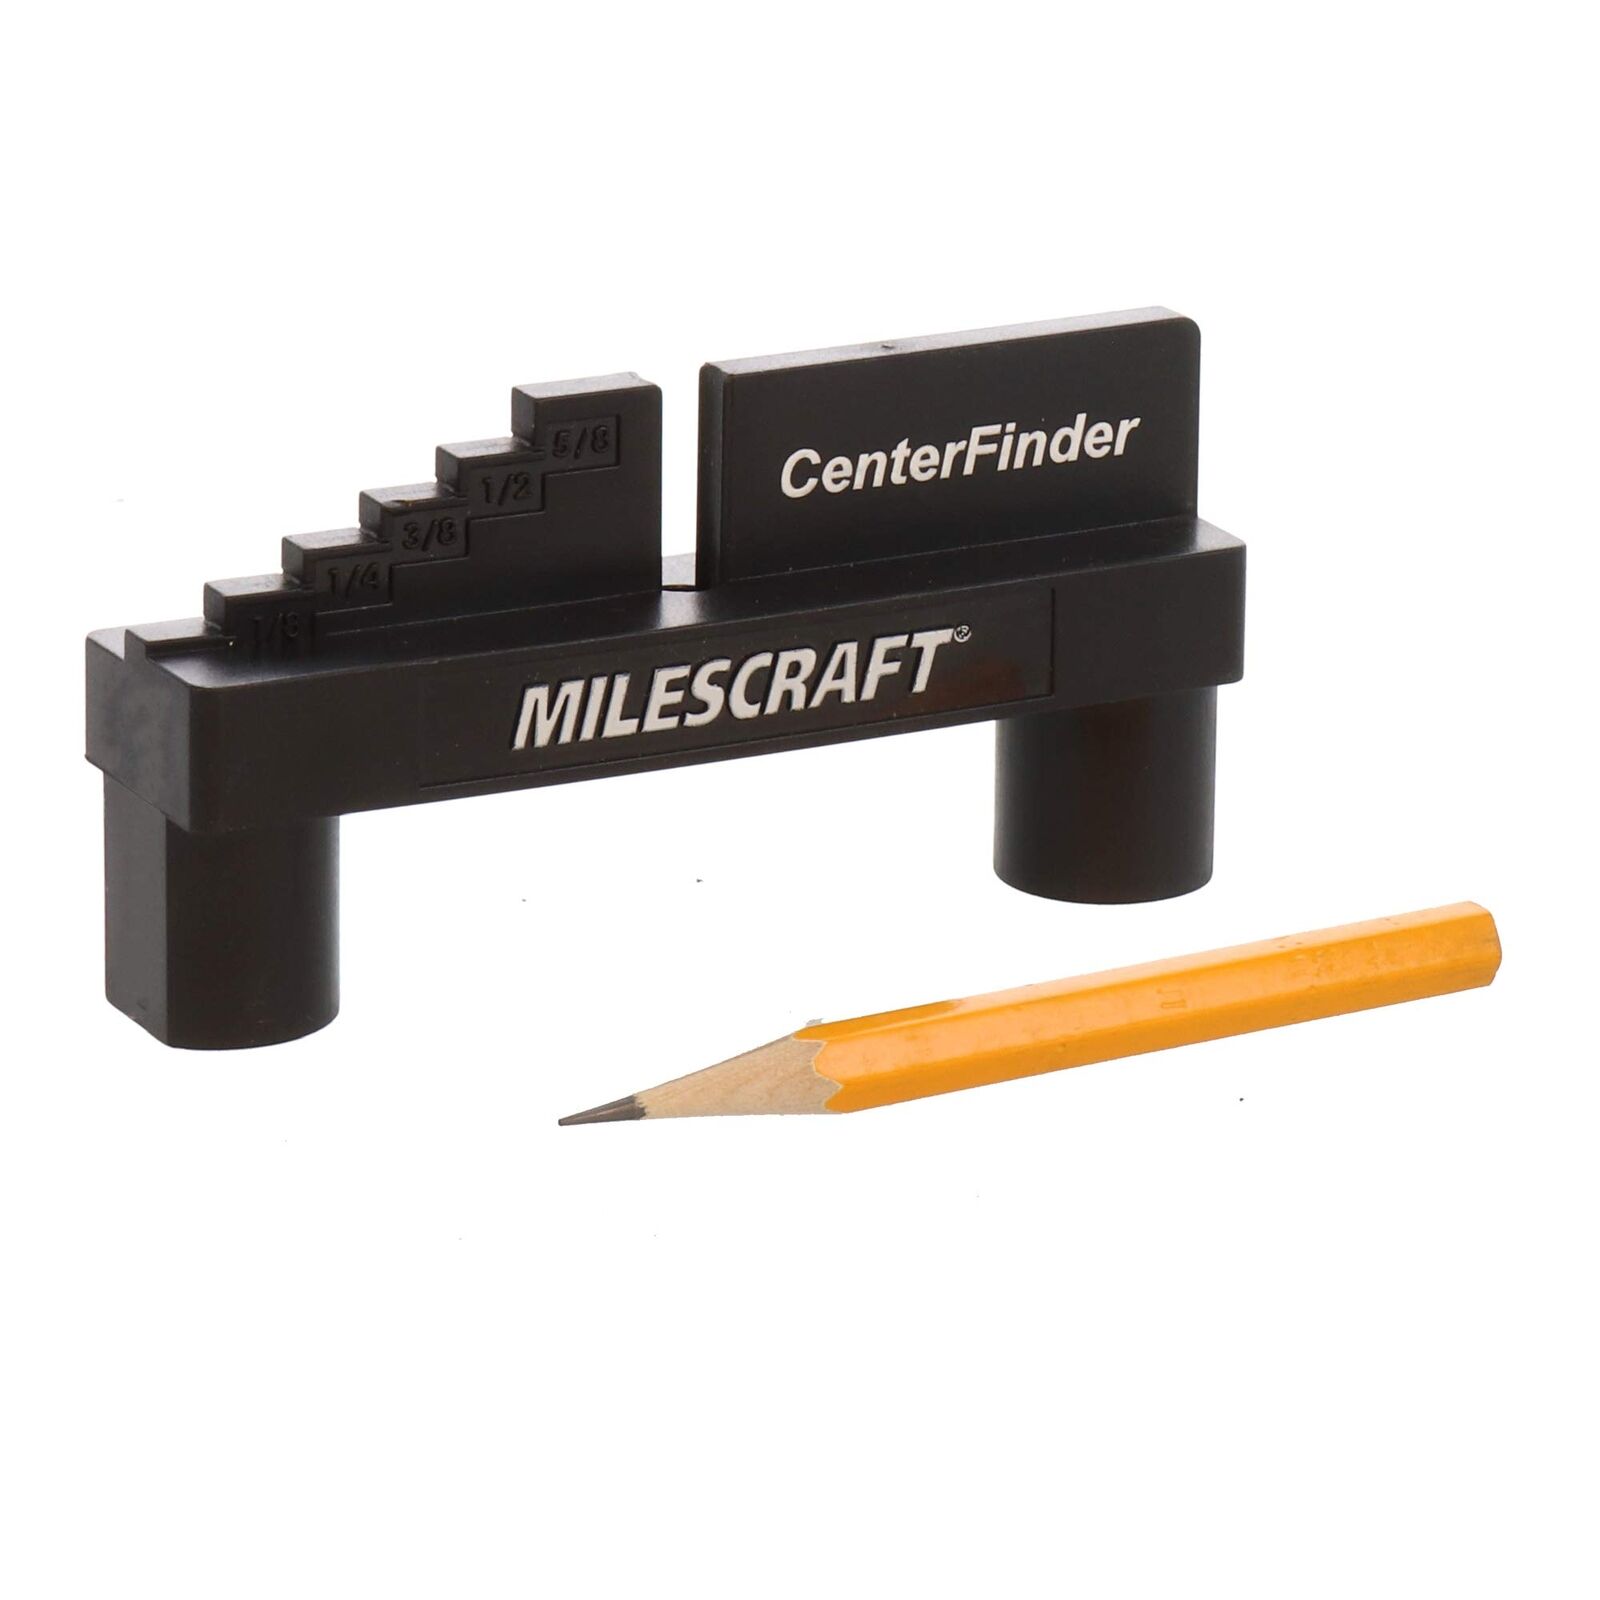 8408 Center Finder - Center Scriber and Offset Measuring & Marking Tool for W...